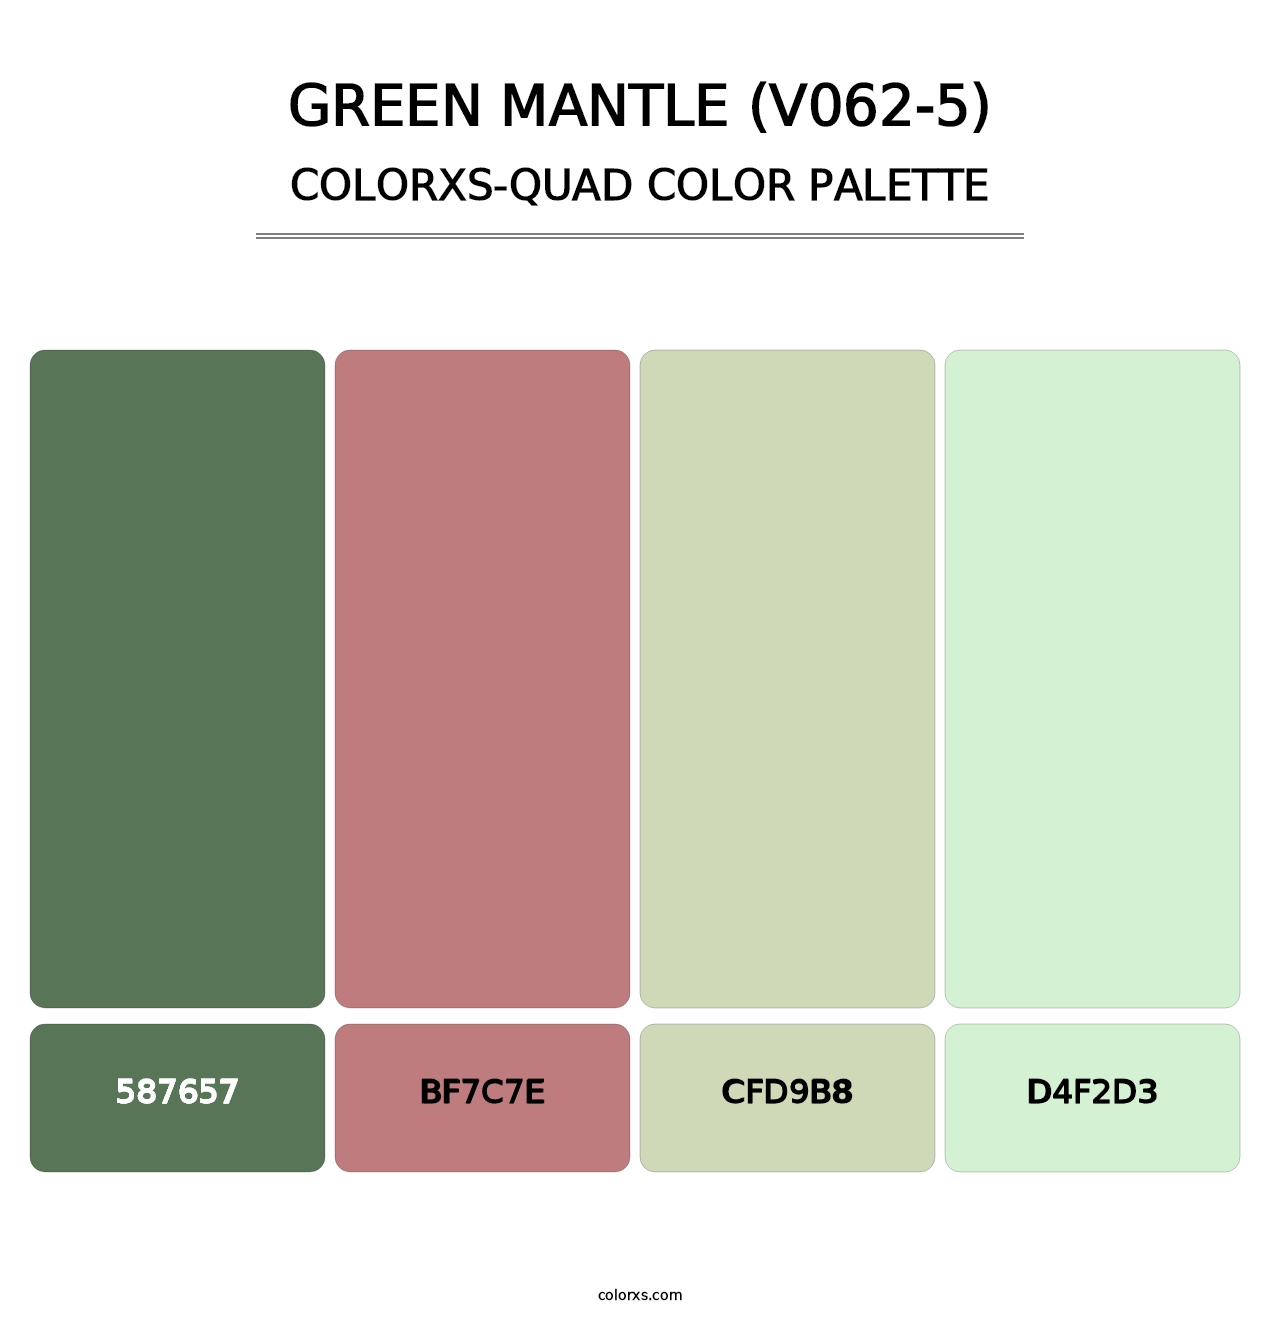 Green Mantle (V062-5) - Colorxs Quad Palette